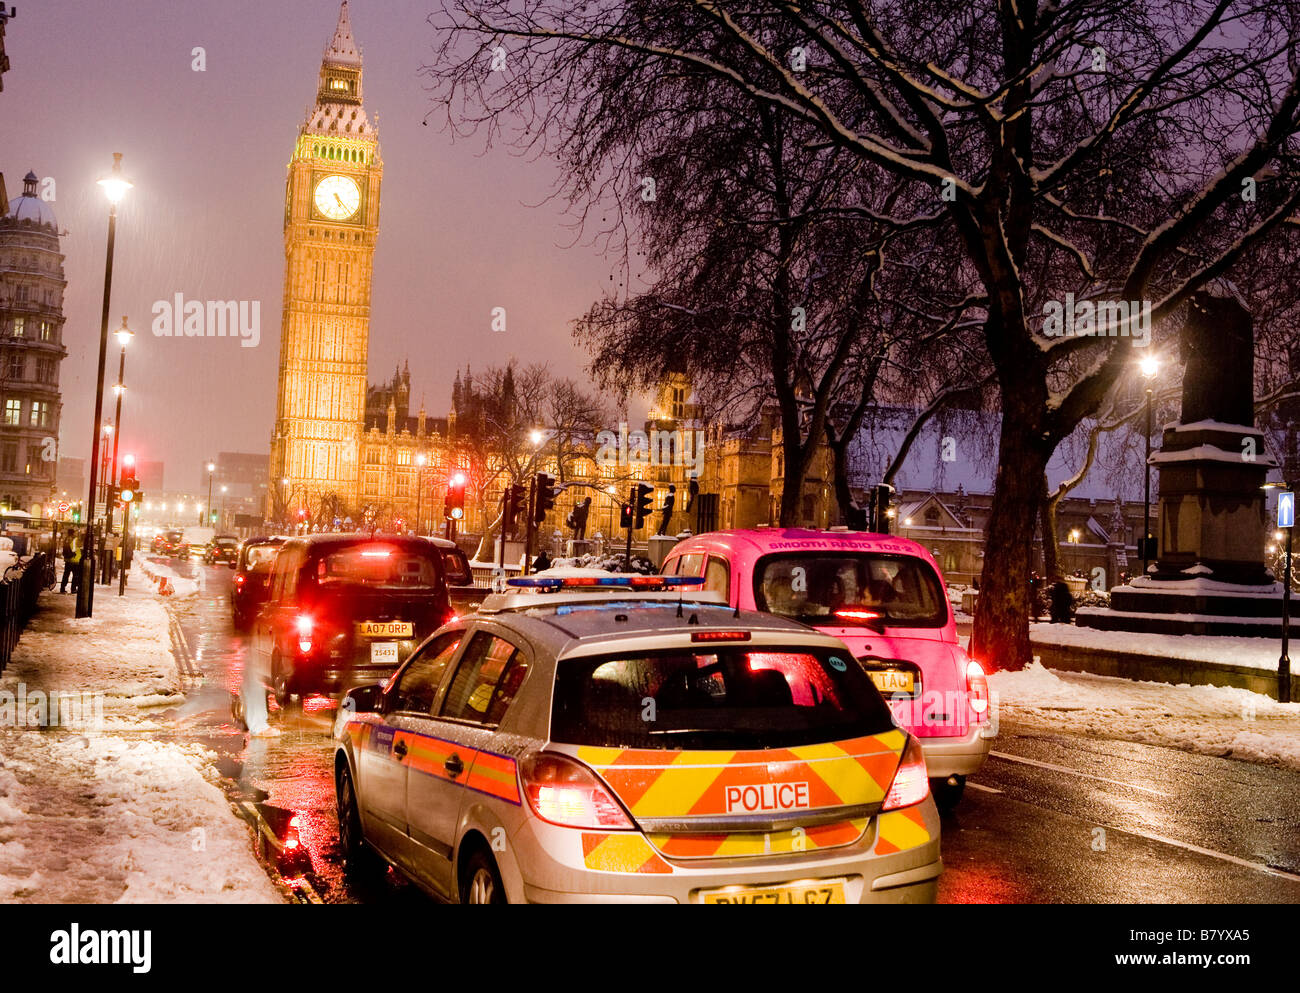 Police Car Parliament Square London Uk Europe Stock Photo